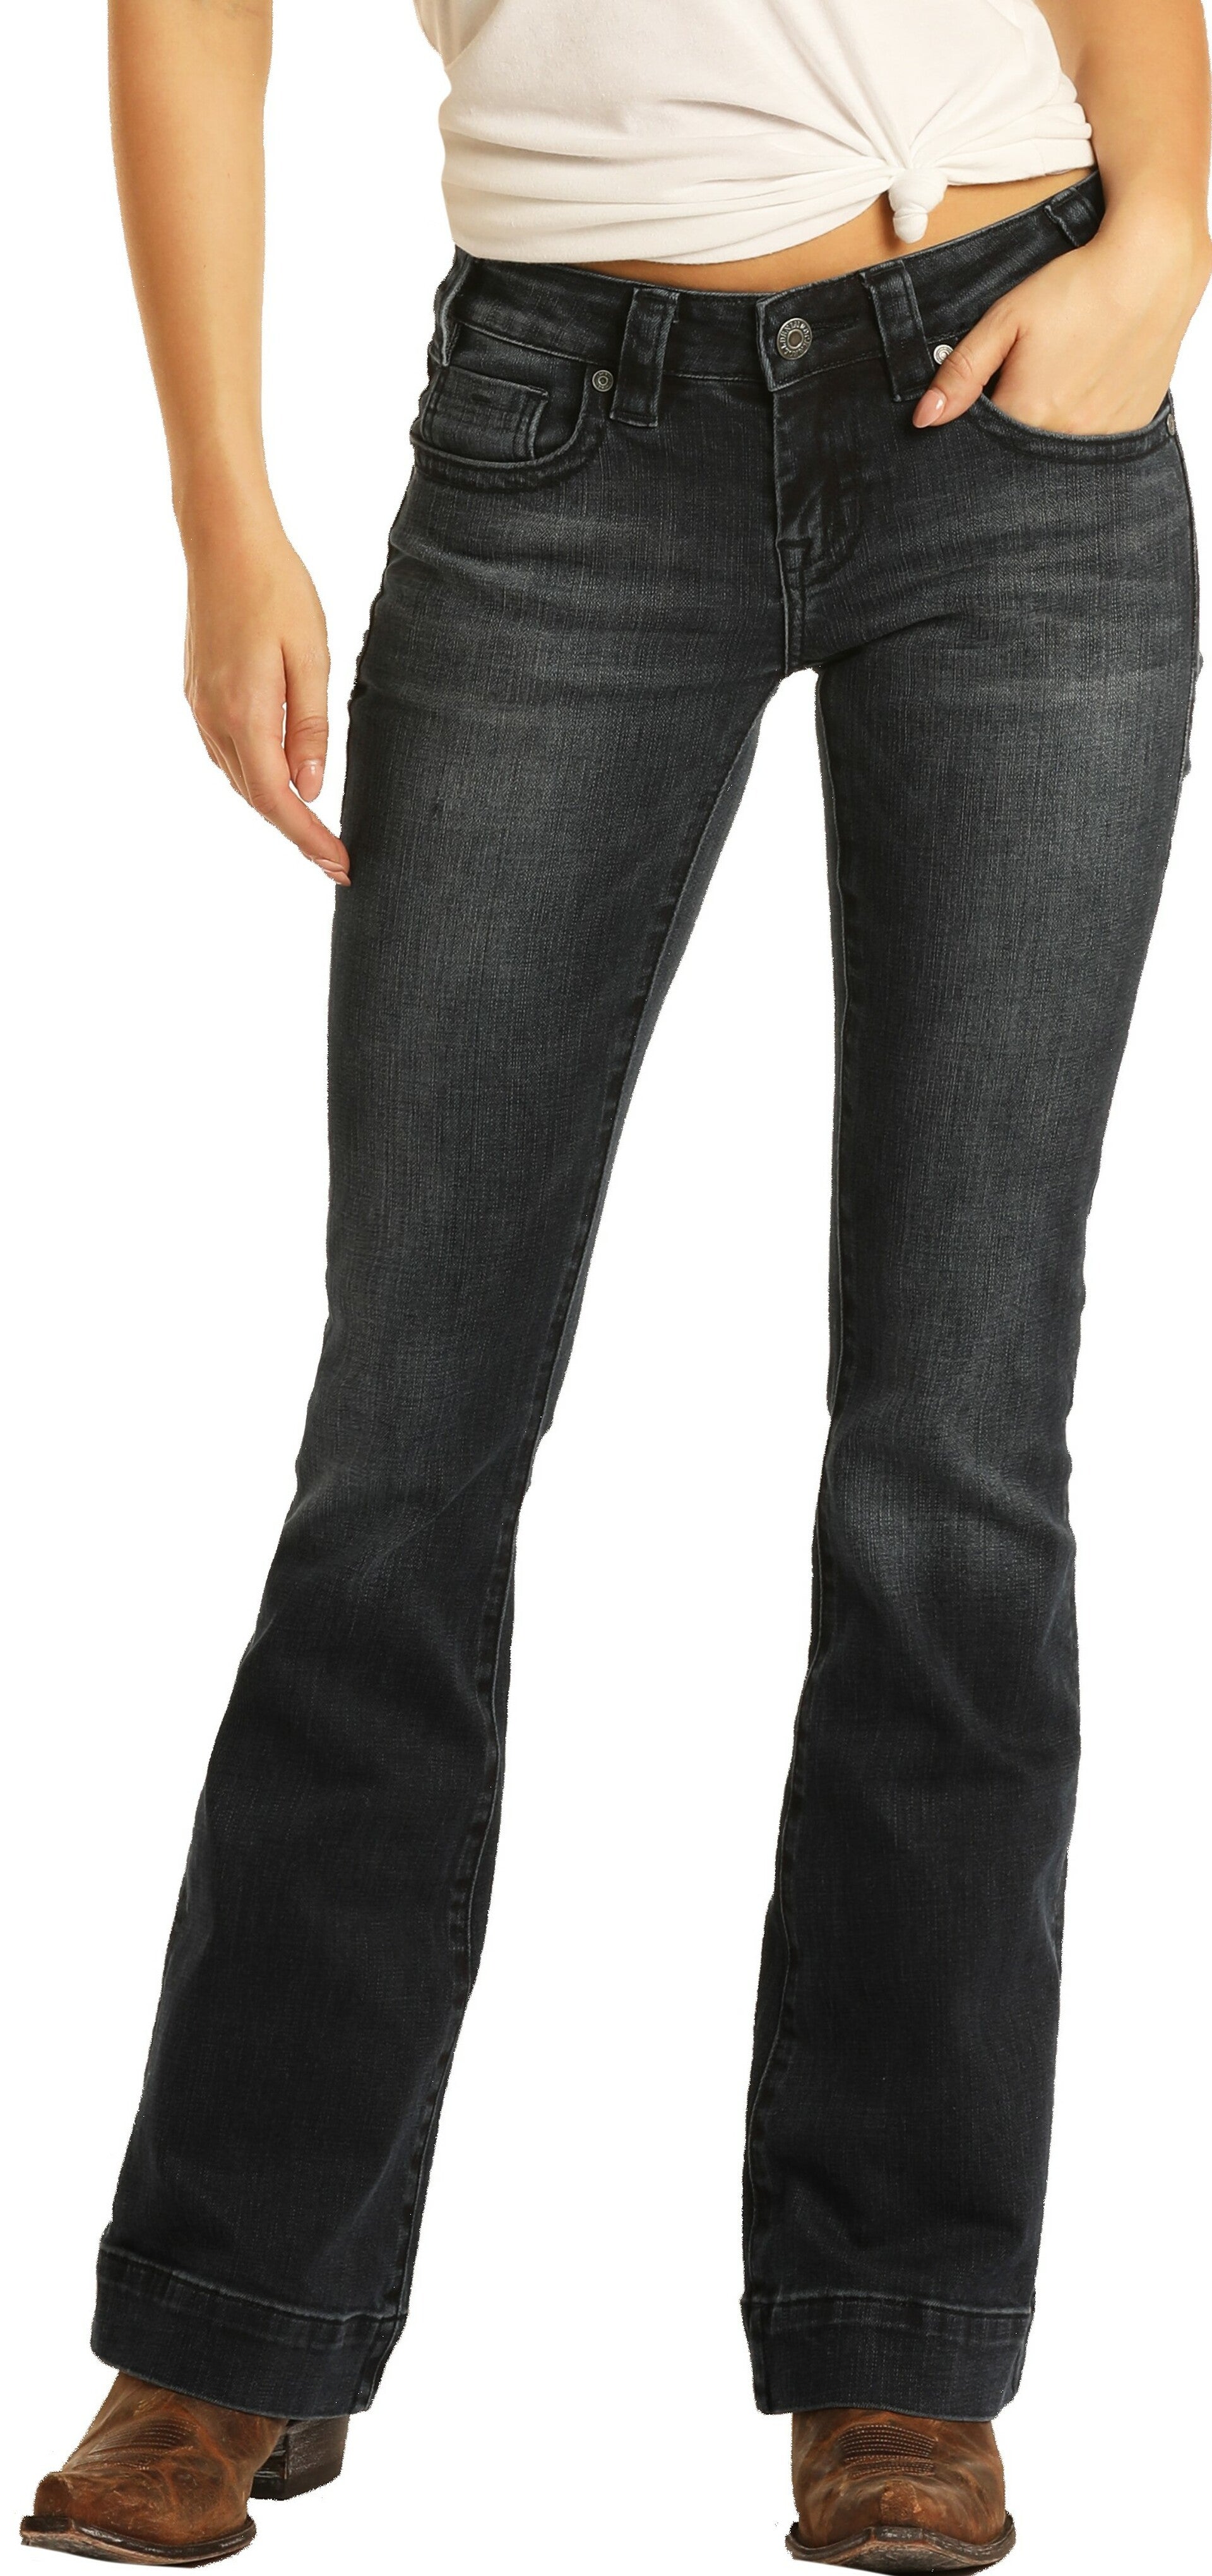 Women's Low-Rise Dark Wash Boot Jeans